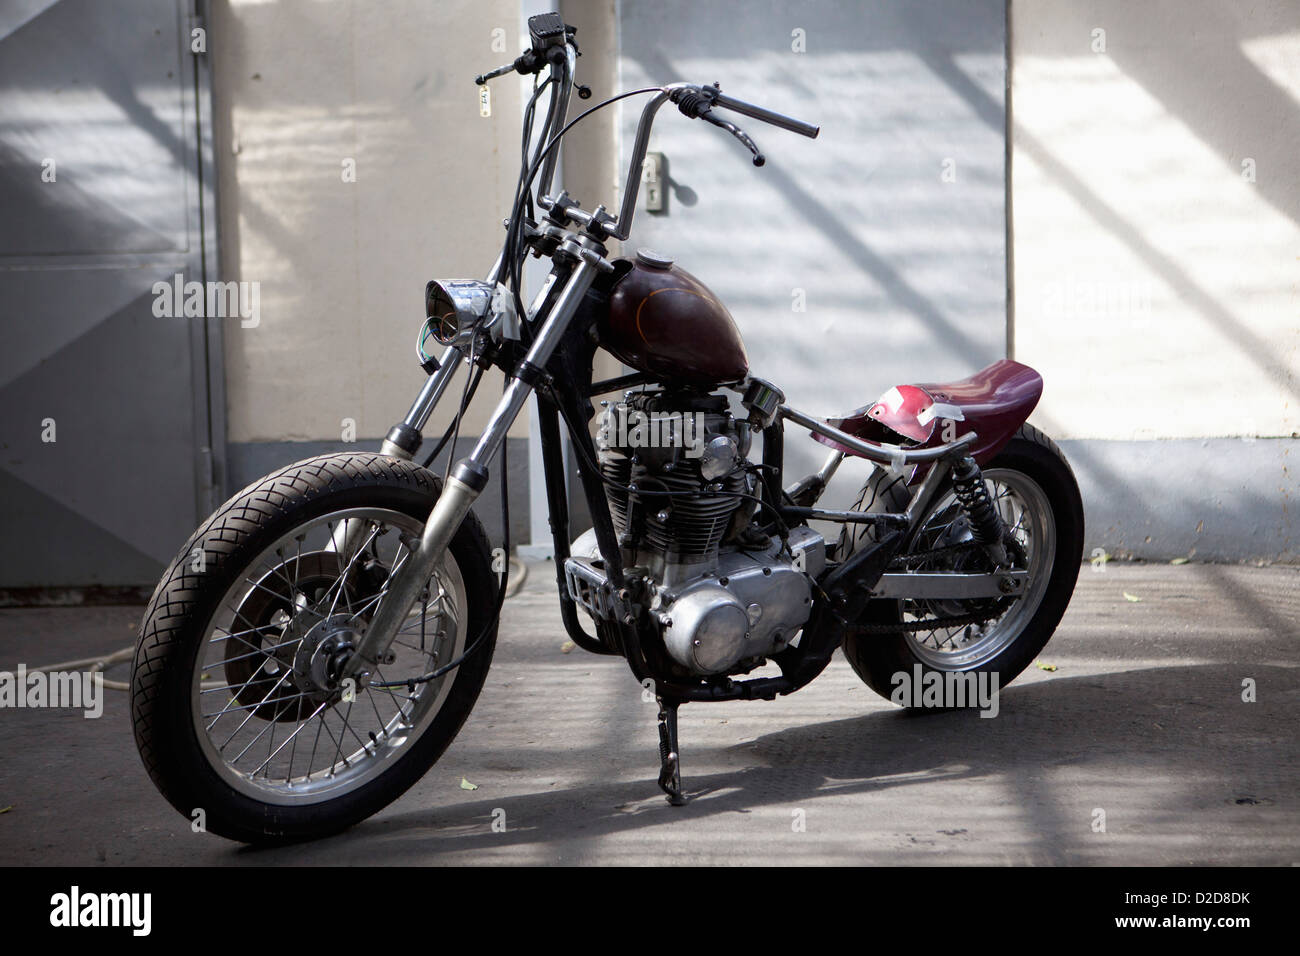 Chopper motorcycle Stock Photo